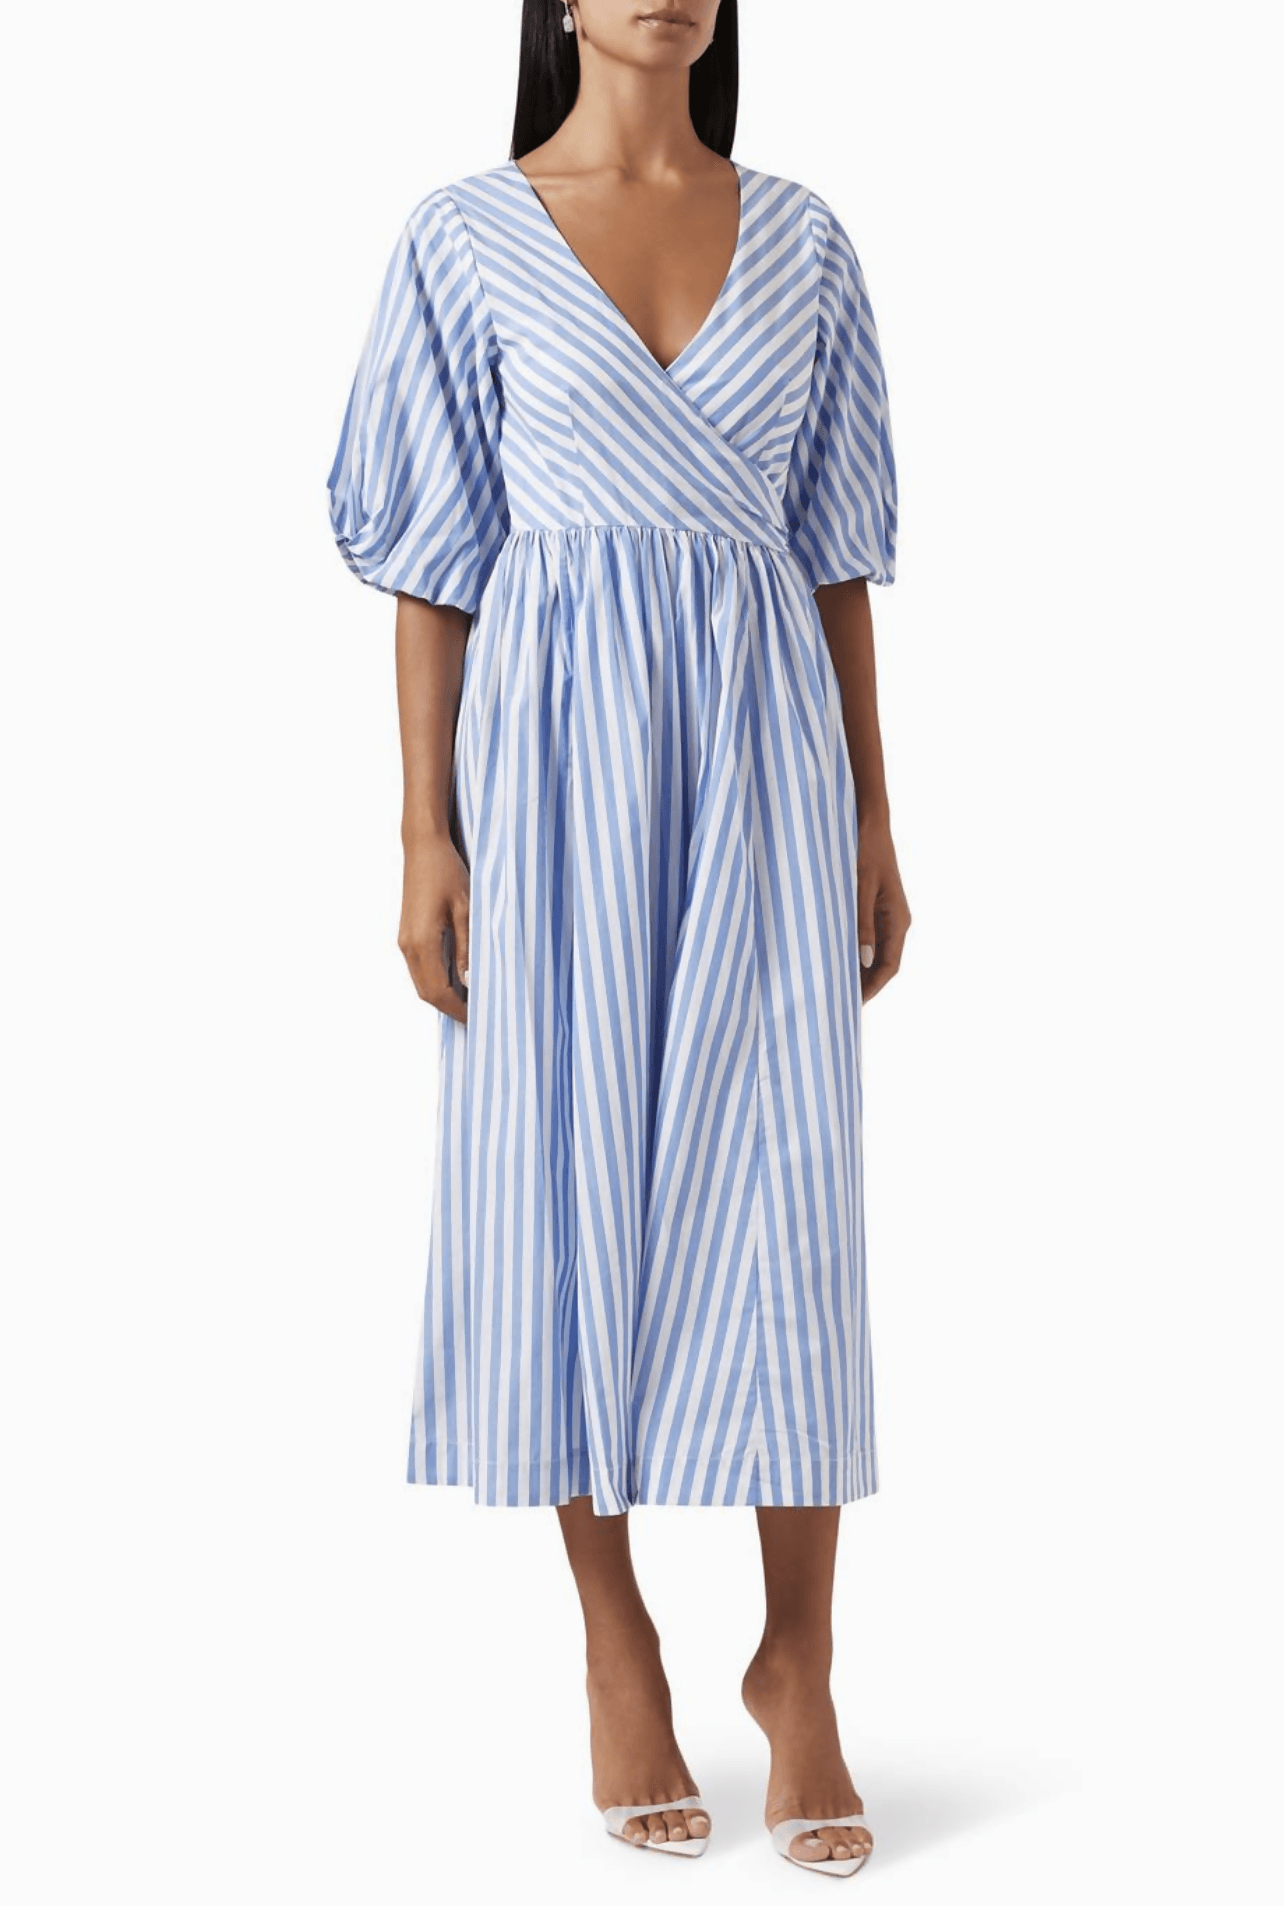 Blue and White Stripe Wrap Midi Dress - Endless